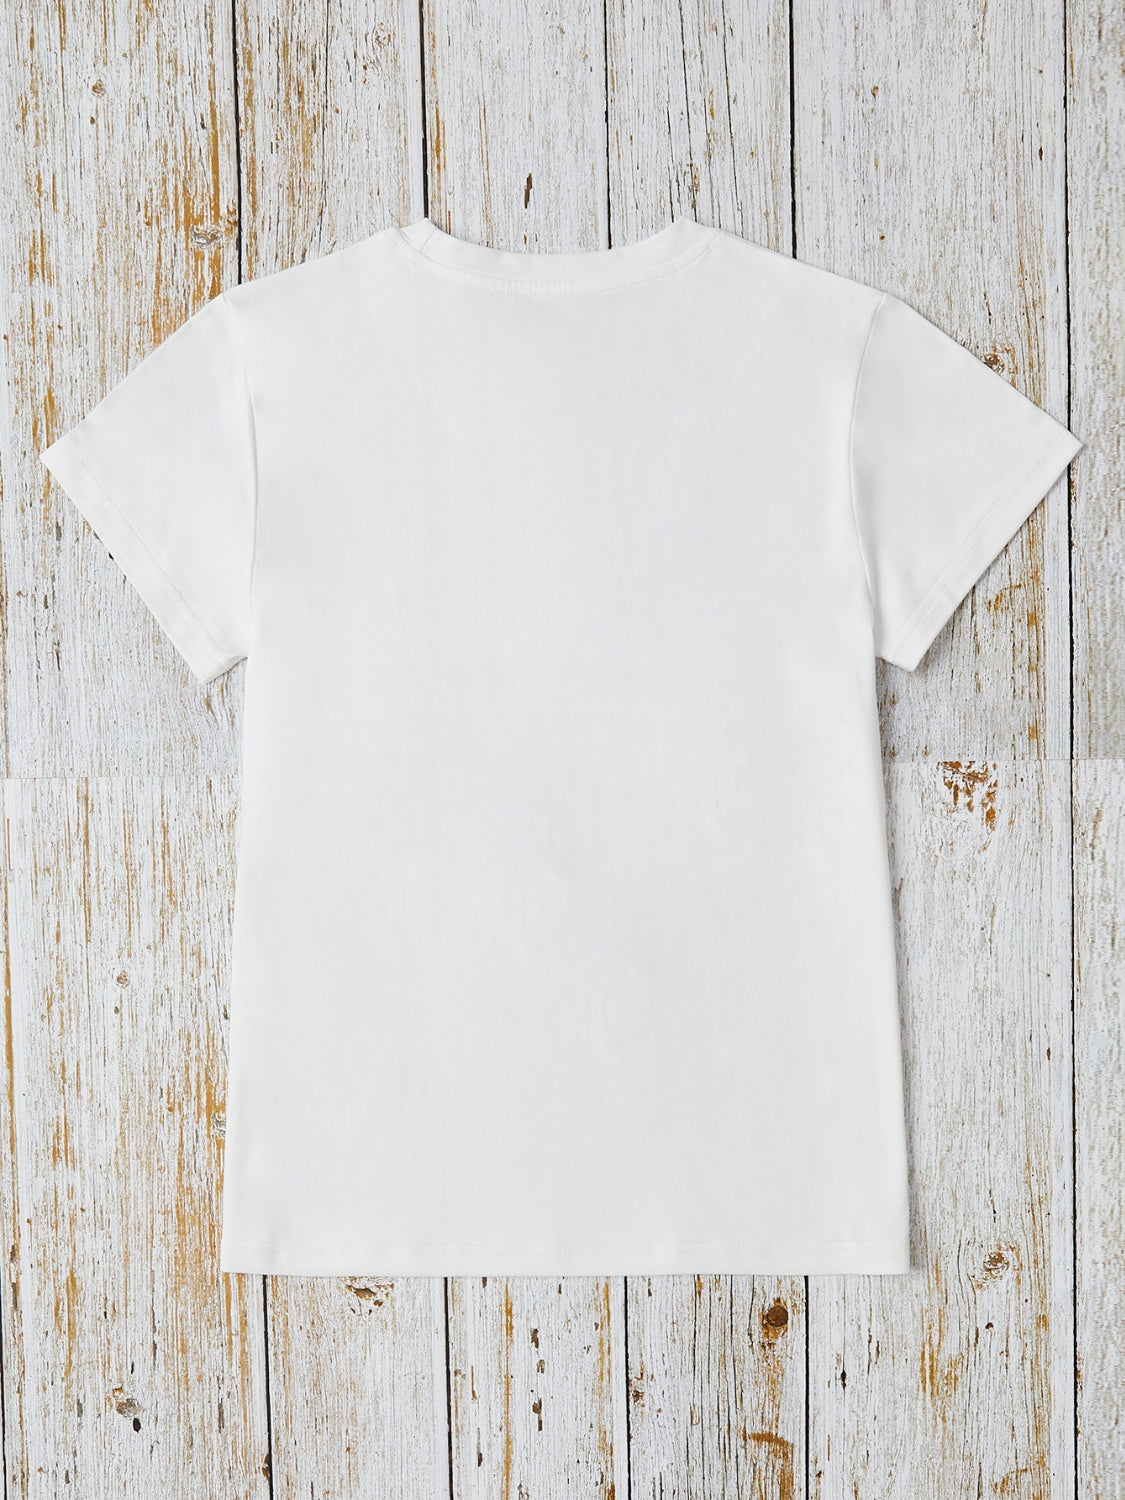 Graphic Round Neck Short Sleeve T-Shirt